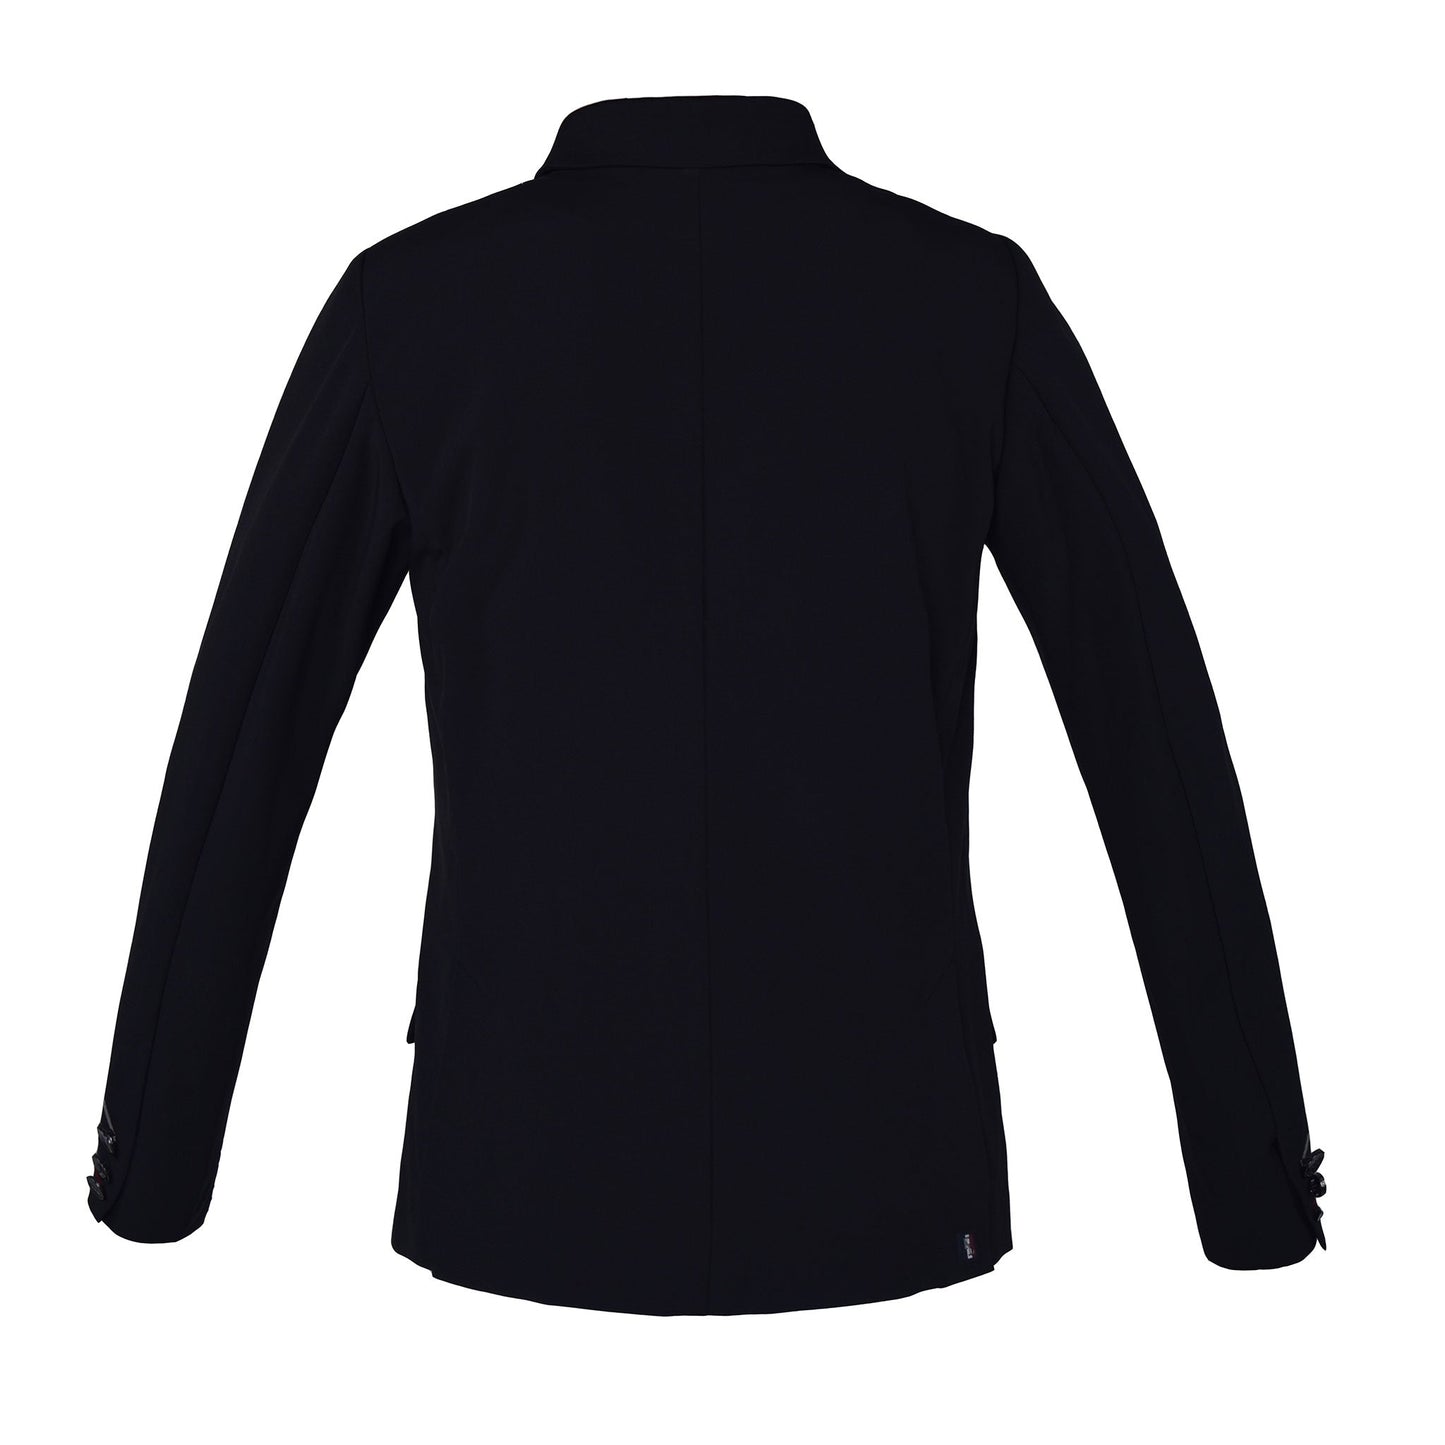 Kingsland Woven Softshell Show Jacket for Men